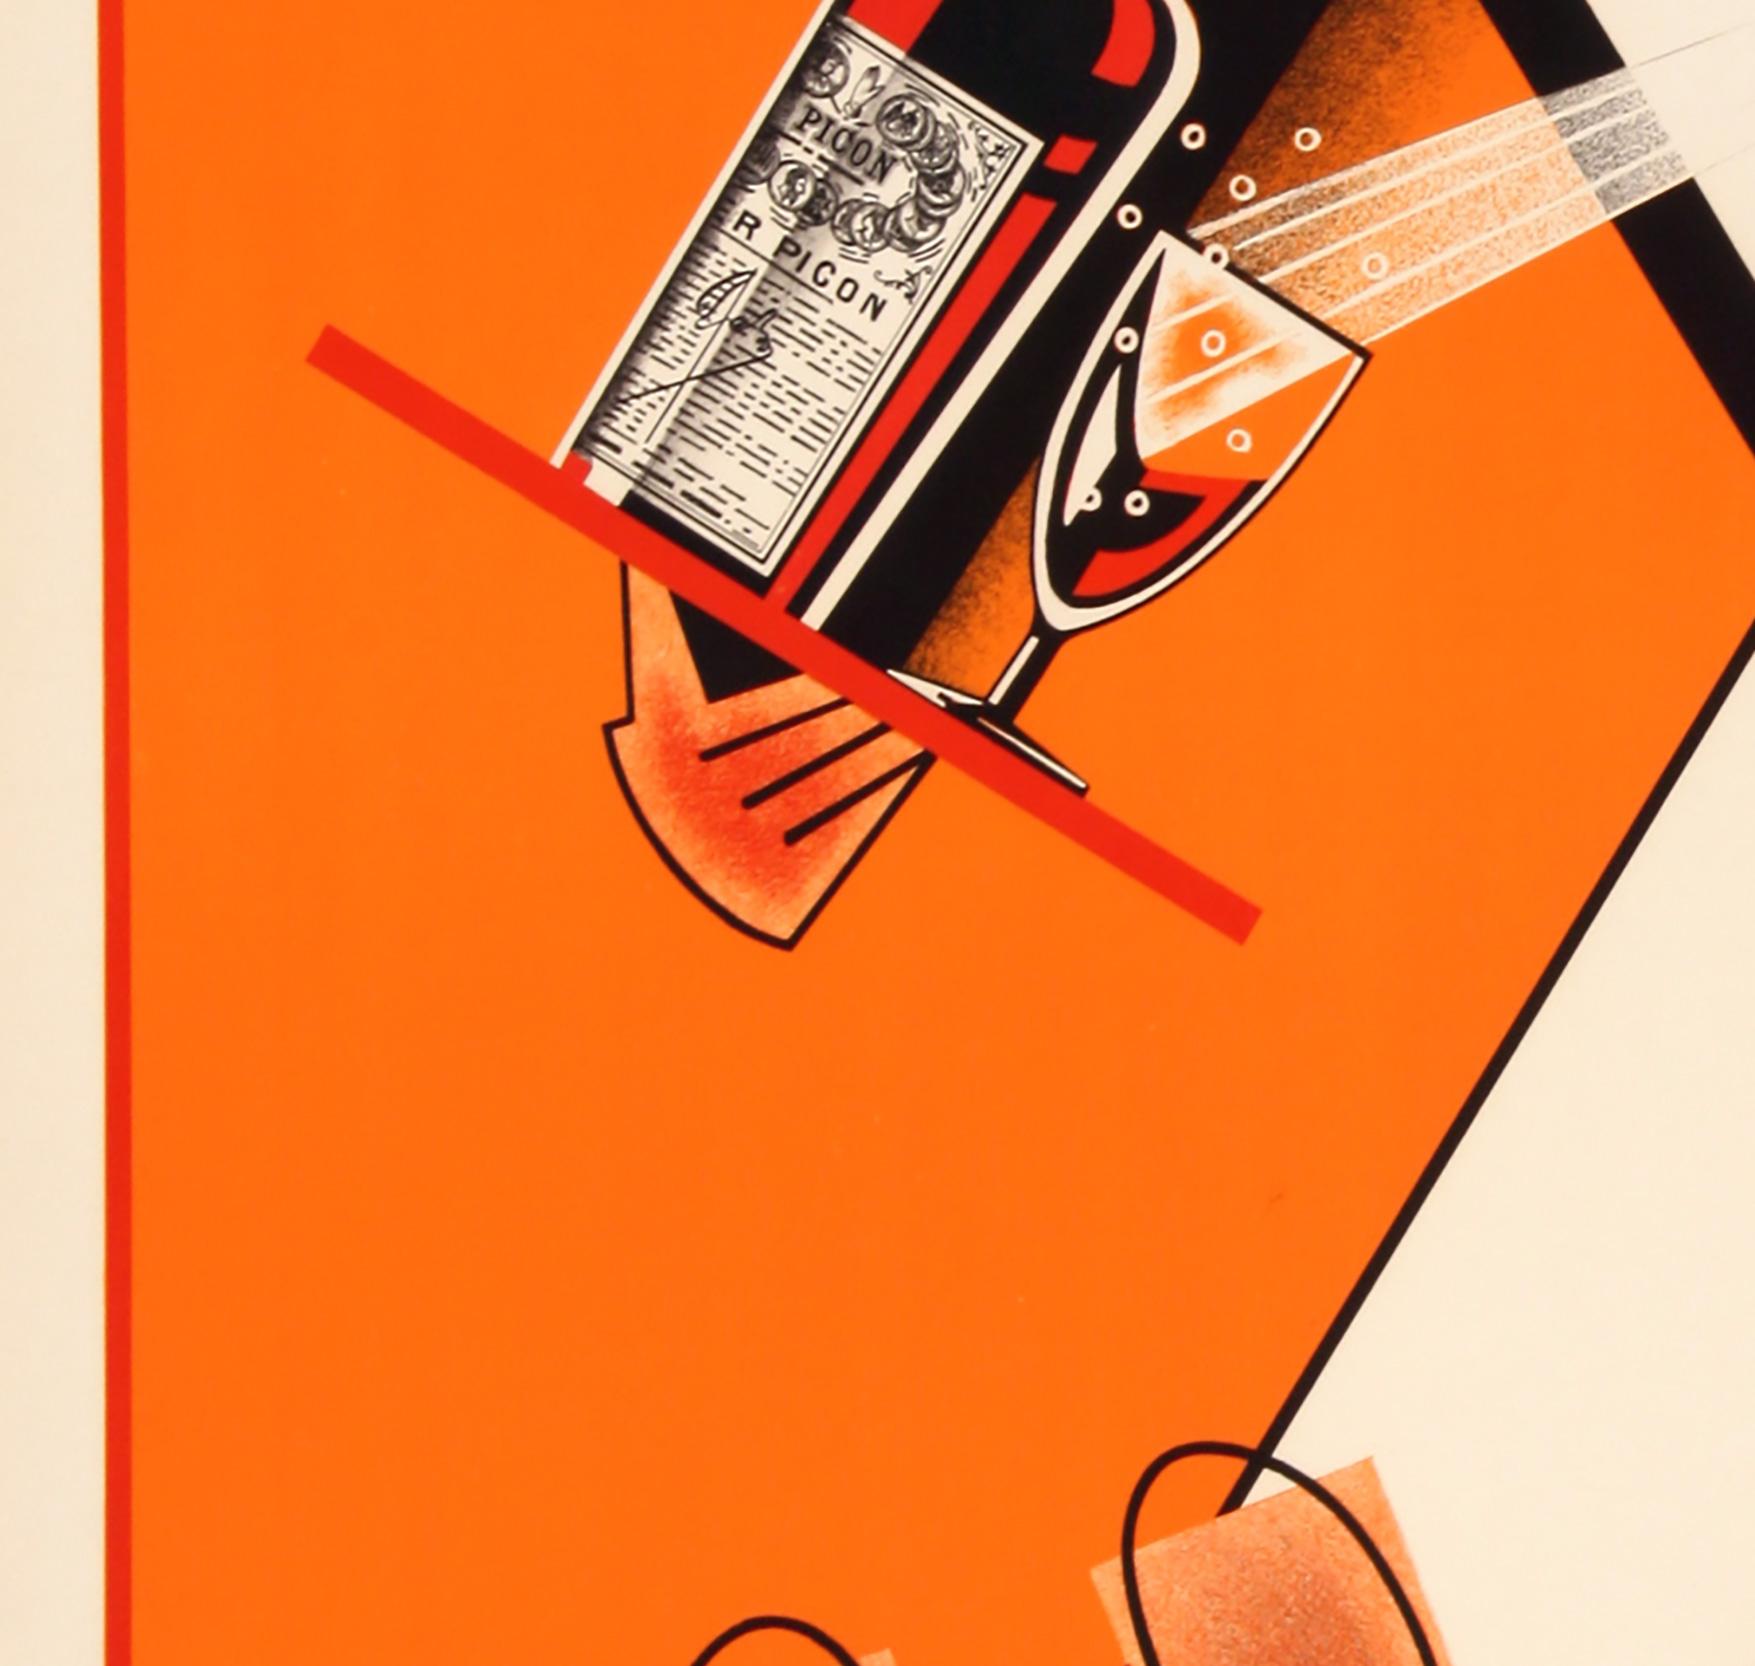 20th Century Amer Picon, C1934 Vintage French Alcohol Advertising Poster, Severo Pozzati For Sale